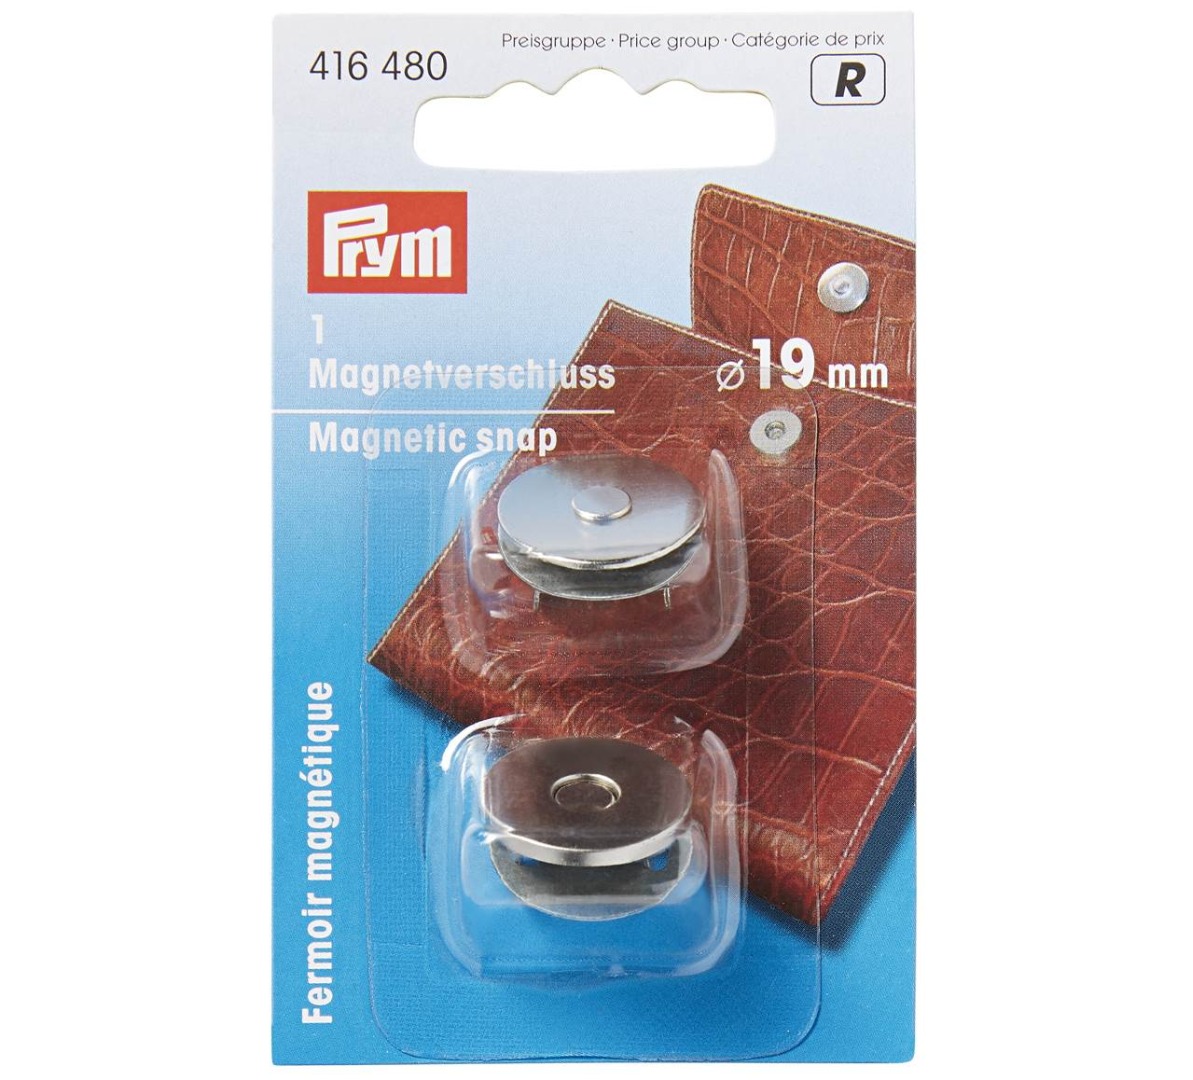 1Pck Magnet-Verschlüsse 19 mm Prym - Inhalt: 1 Stück, silberfarbig